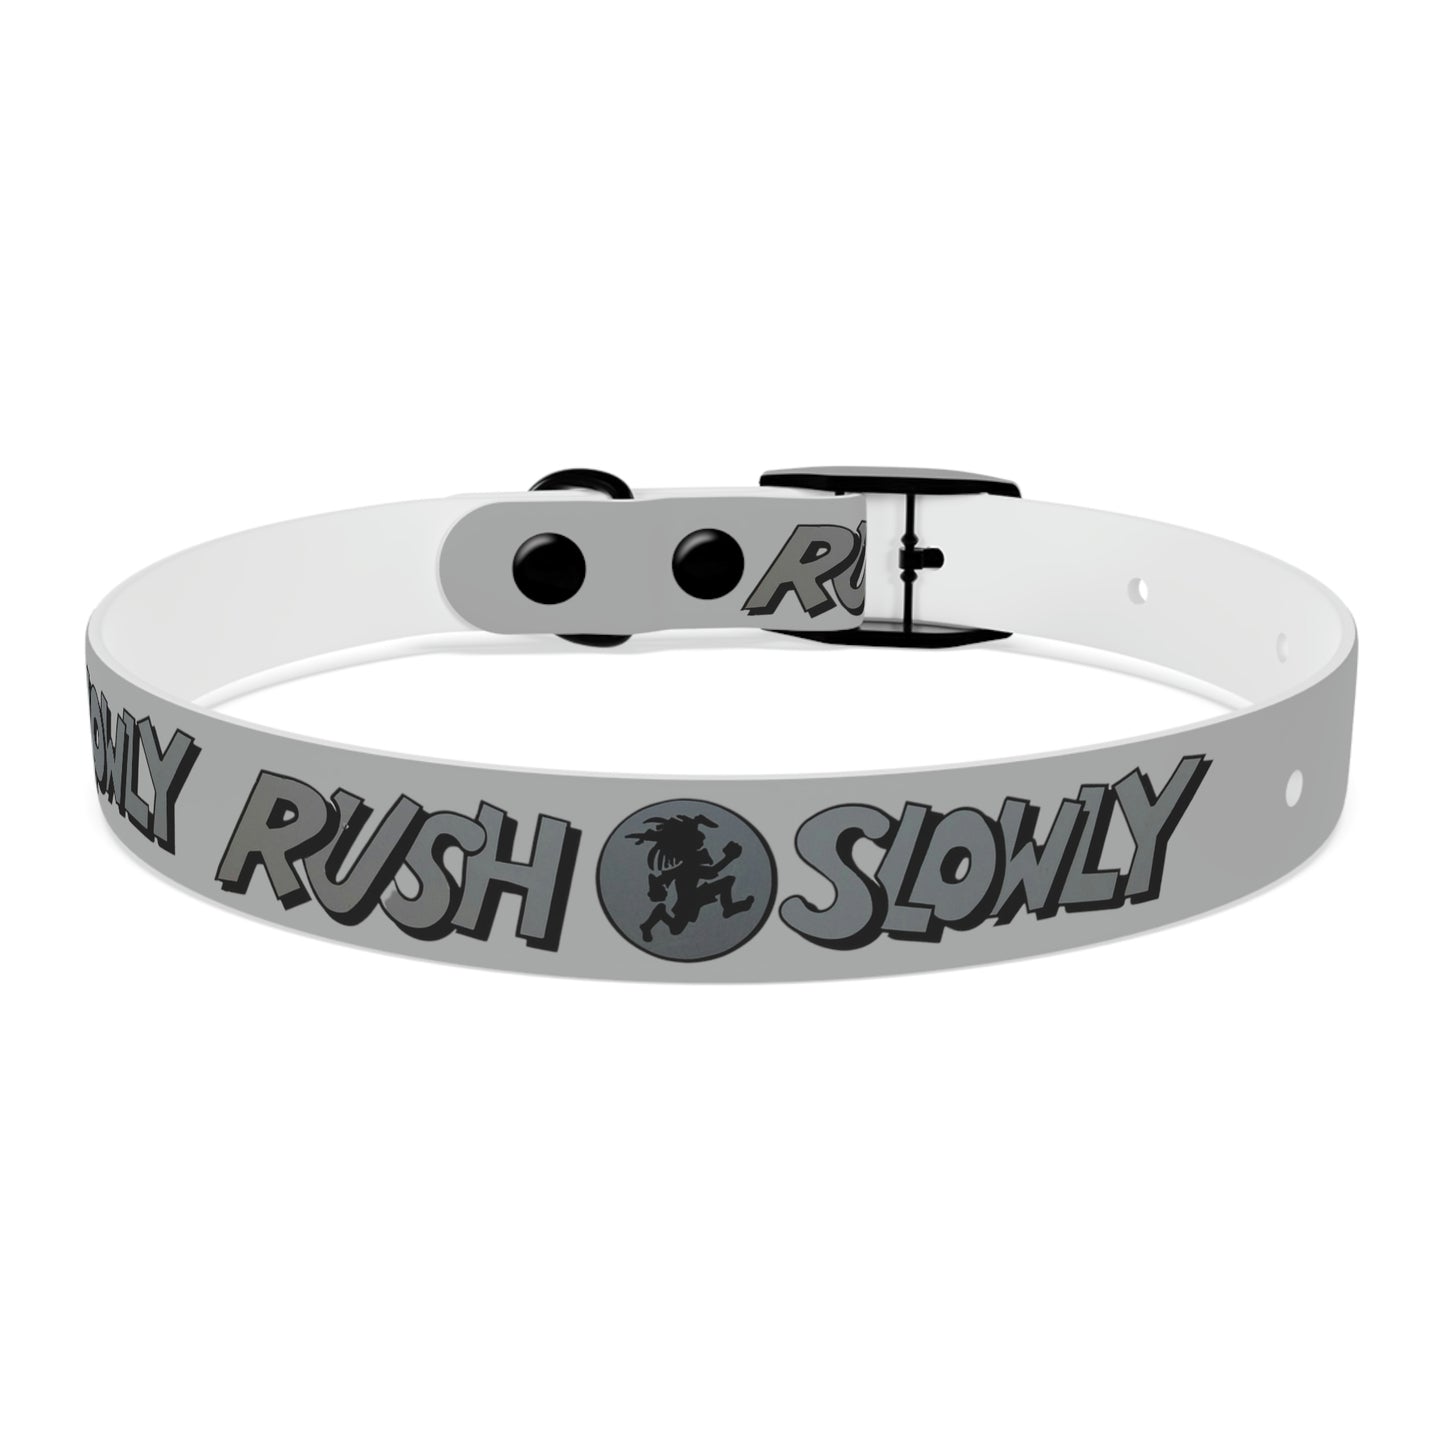 Rush Slowly Dog Collar